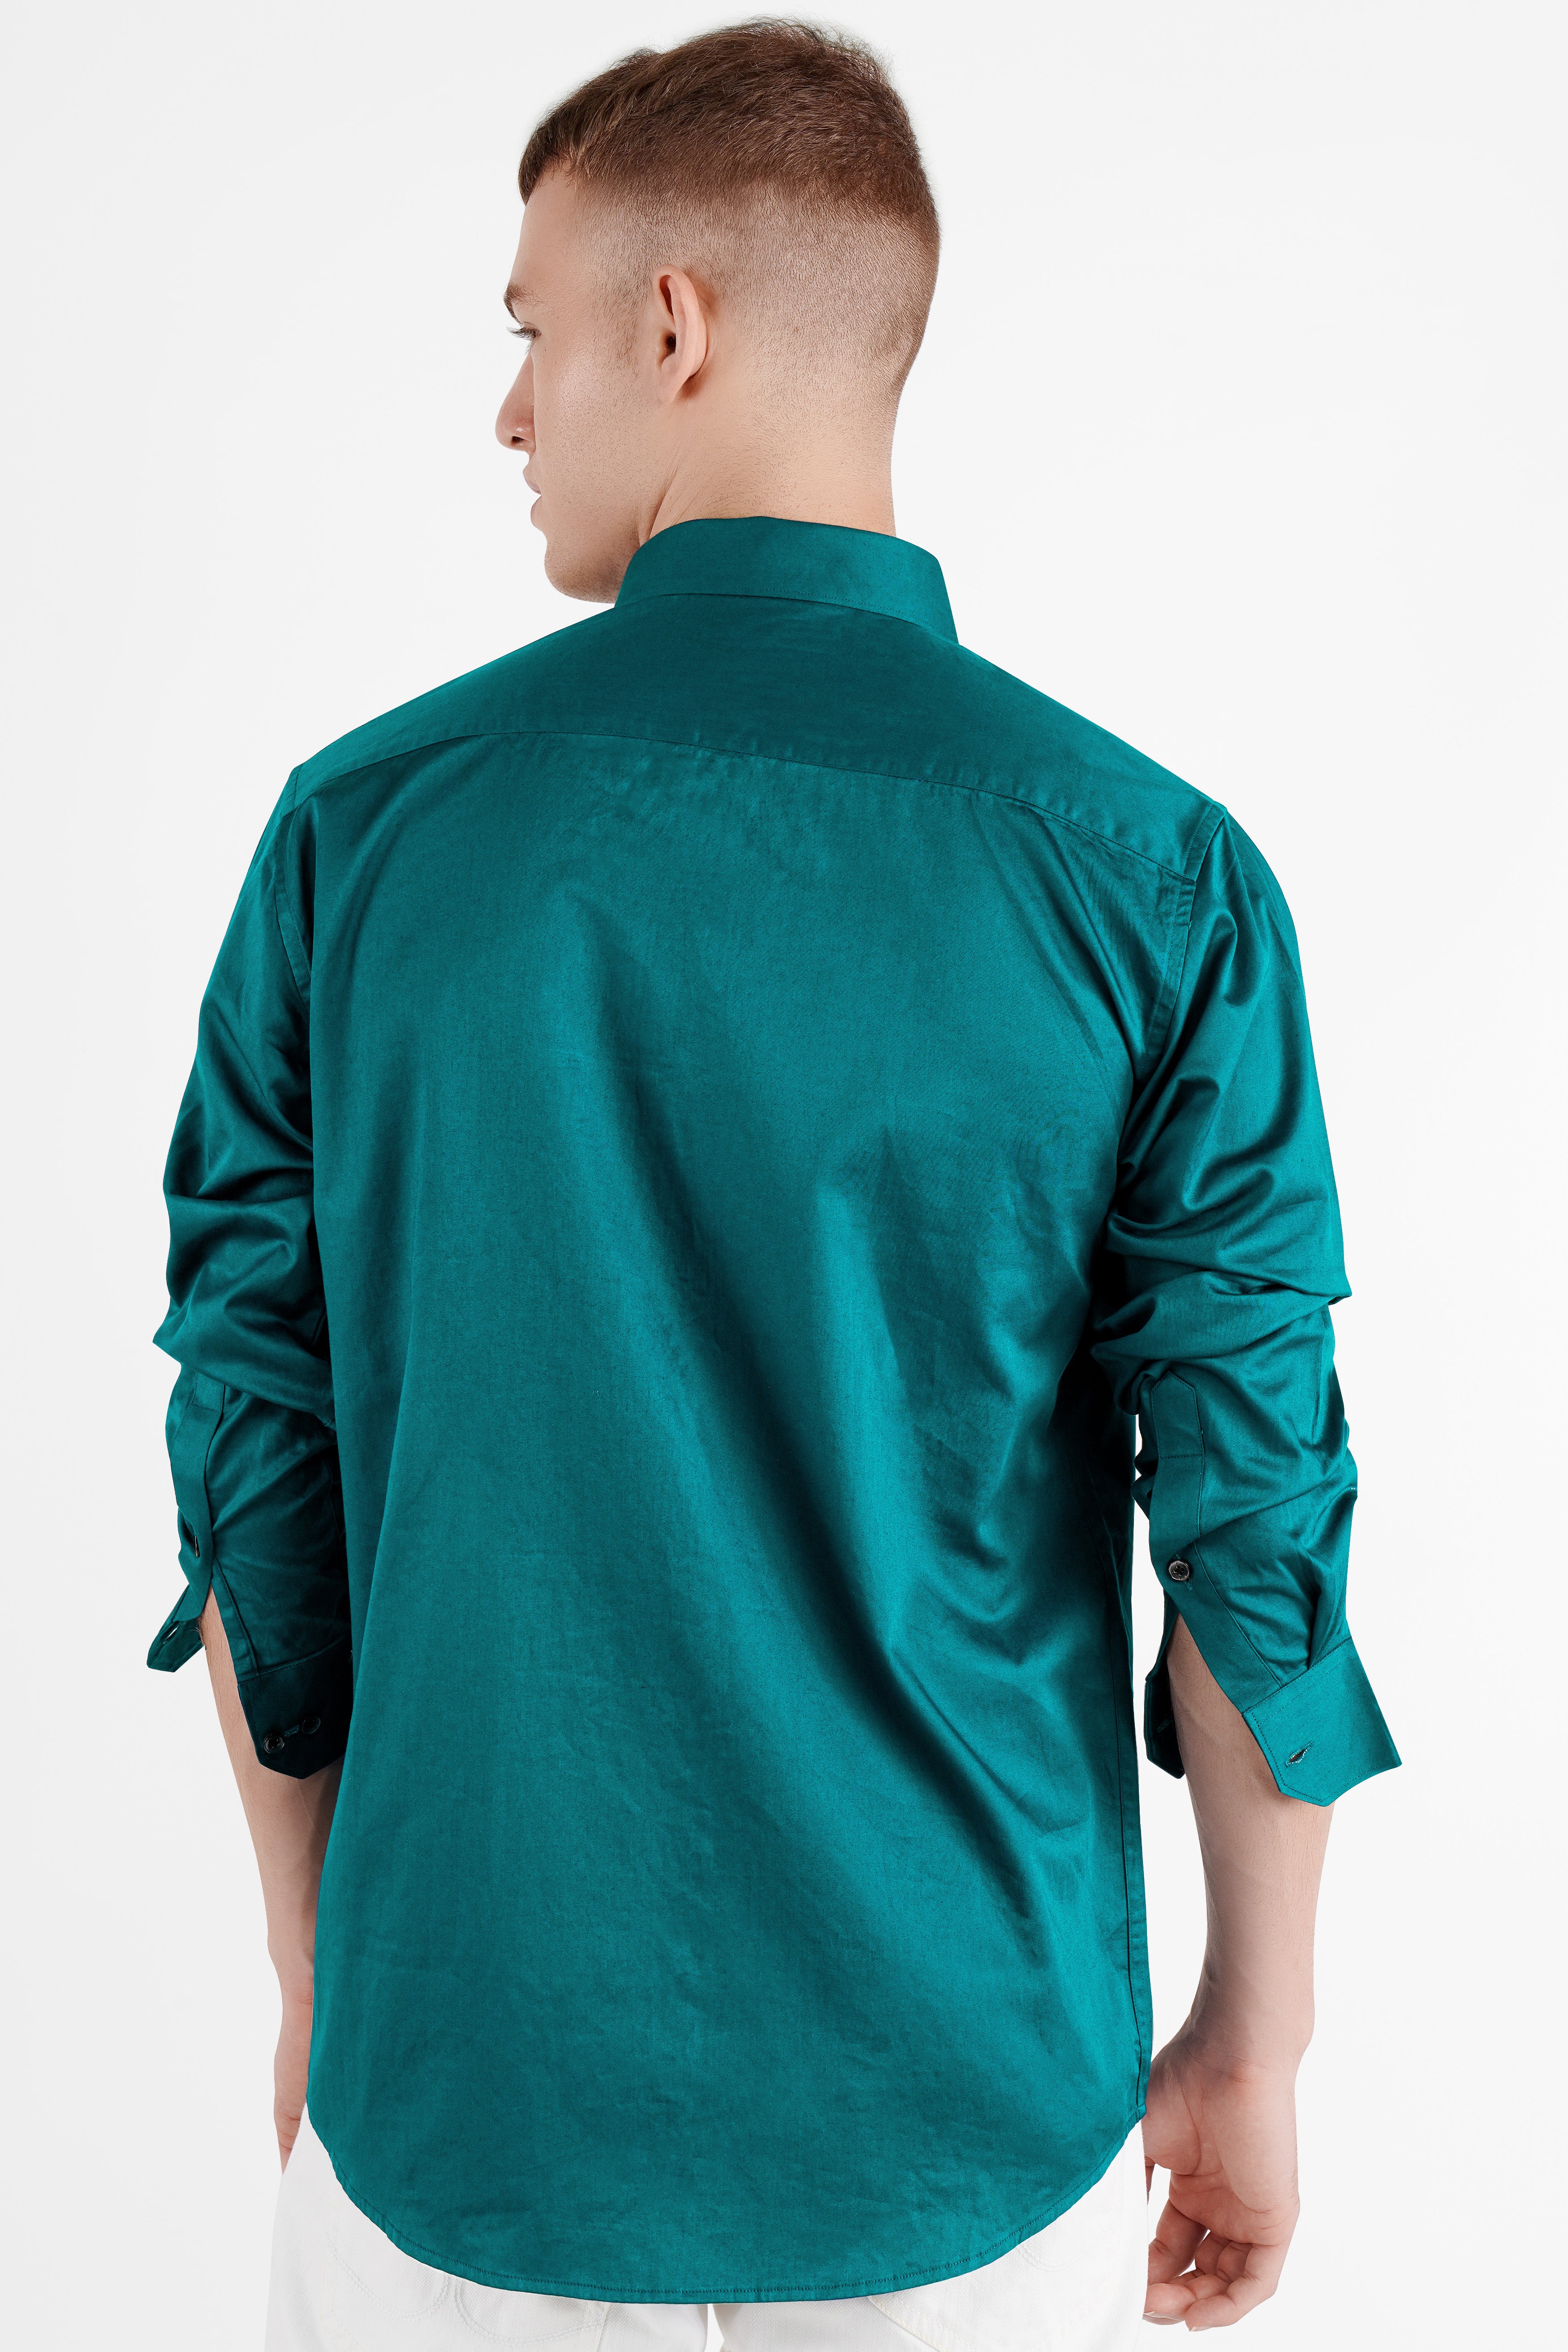 Sherpa Green Hand Painted Super Soft Premium Cotton Designer Shirt